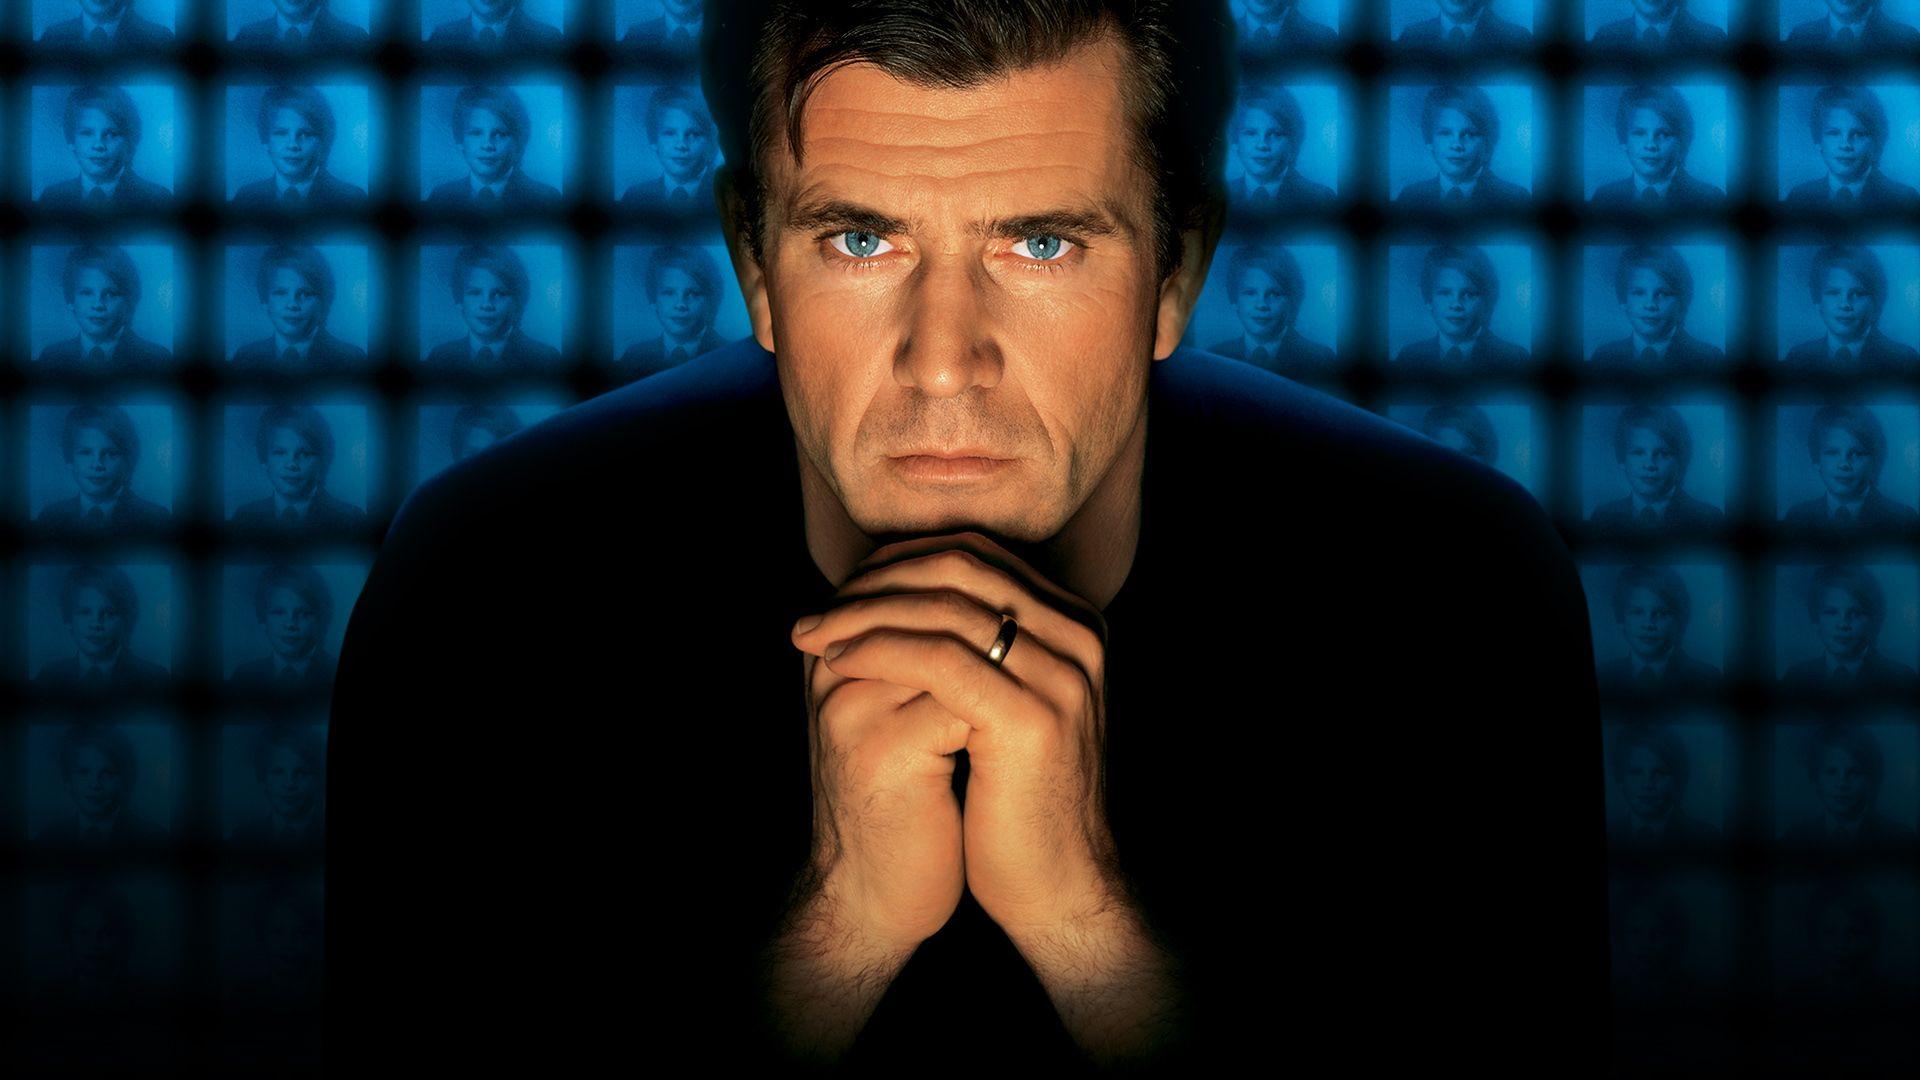 Mel Gibson Wallpaper, Mel Gibson Background